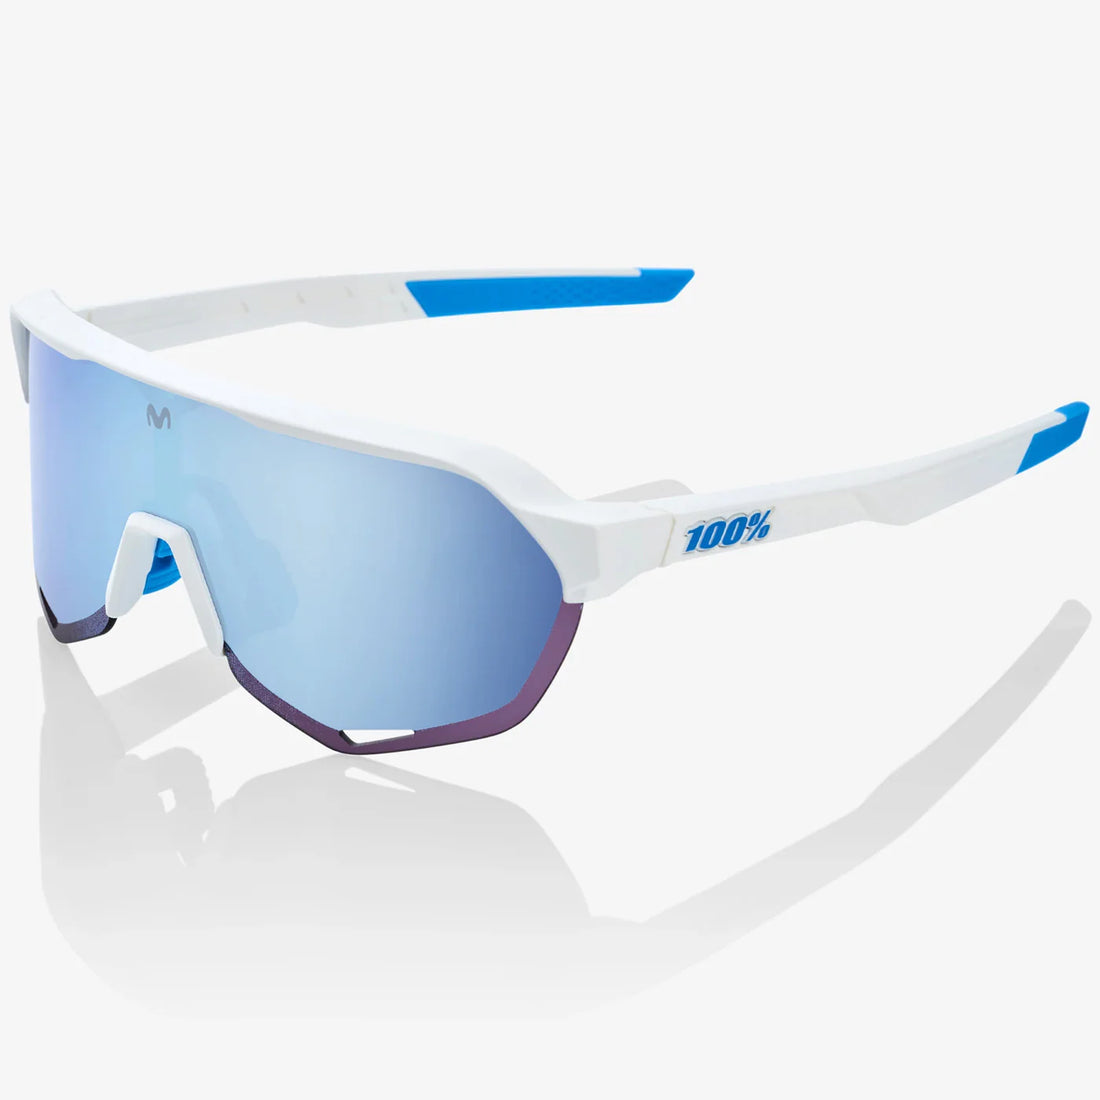 S2 - Movistar Team Sunglasses